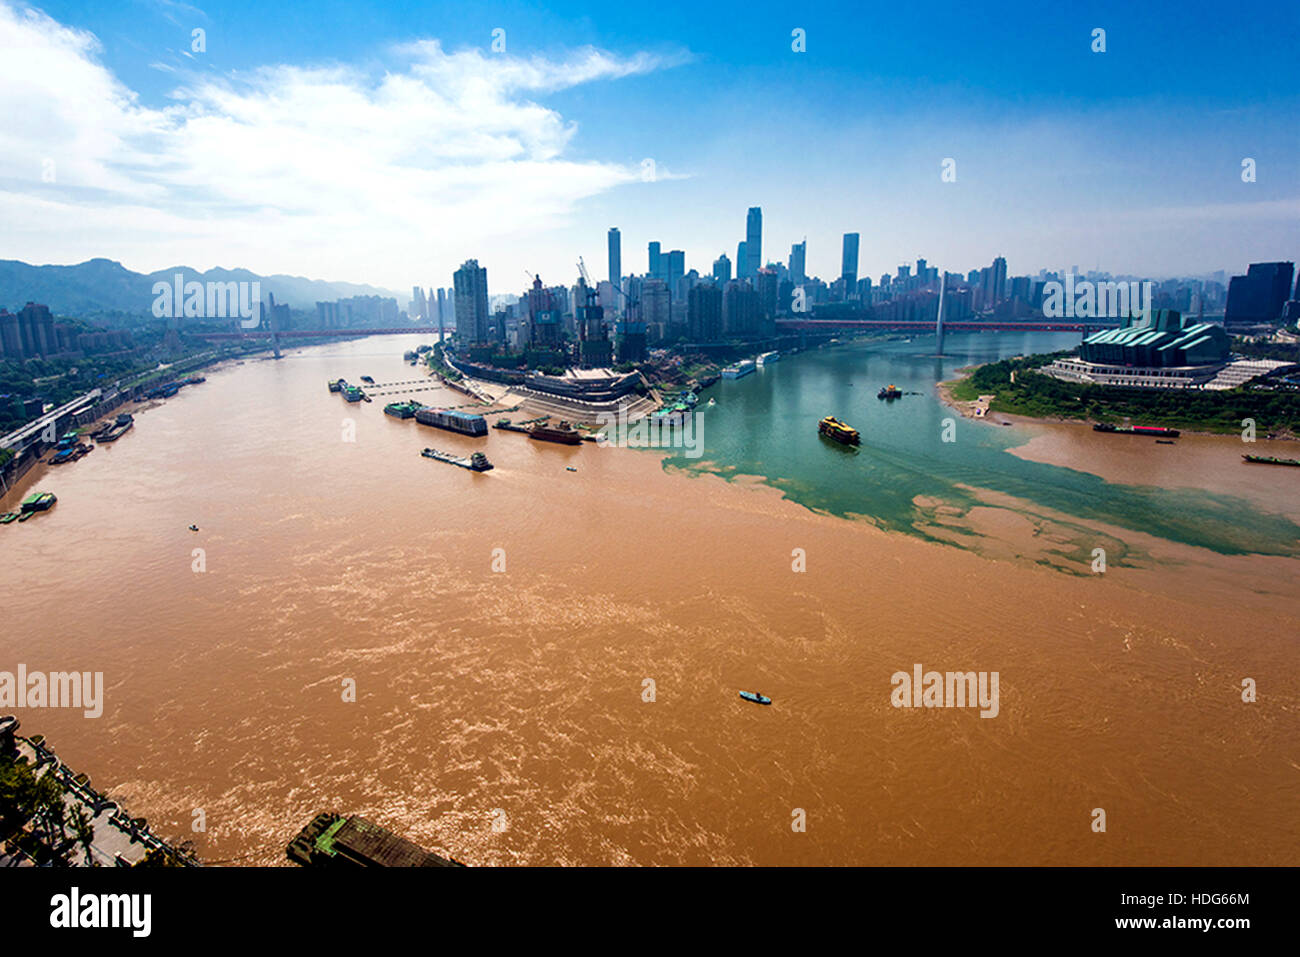 Chongqing Chongqing, China. 2 de diciembre, 2016. Chongqing, China - 2 de diciembre de 2016: (Sólo para uso editorial. CHINA).El cruce del río Yangtze y los ríos Jialing River en el sudoeste de China, Chongqing Diciembre 5th, 2016. El río Yangtze y los ríos Jialing Río converge en Chongqing, creando un paisaje majestuoso de agua de absolutamente diferentes colores en el cruce. © SIPA Asia/Zuma alambre/Alamy Live News Foto de stock